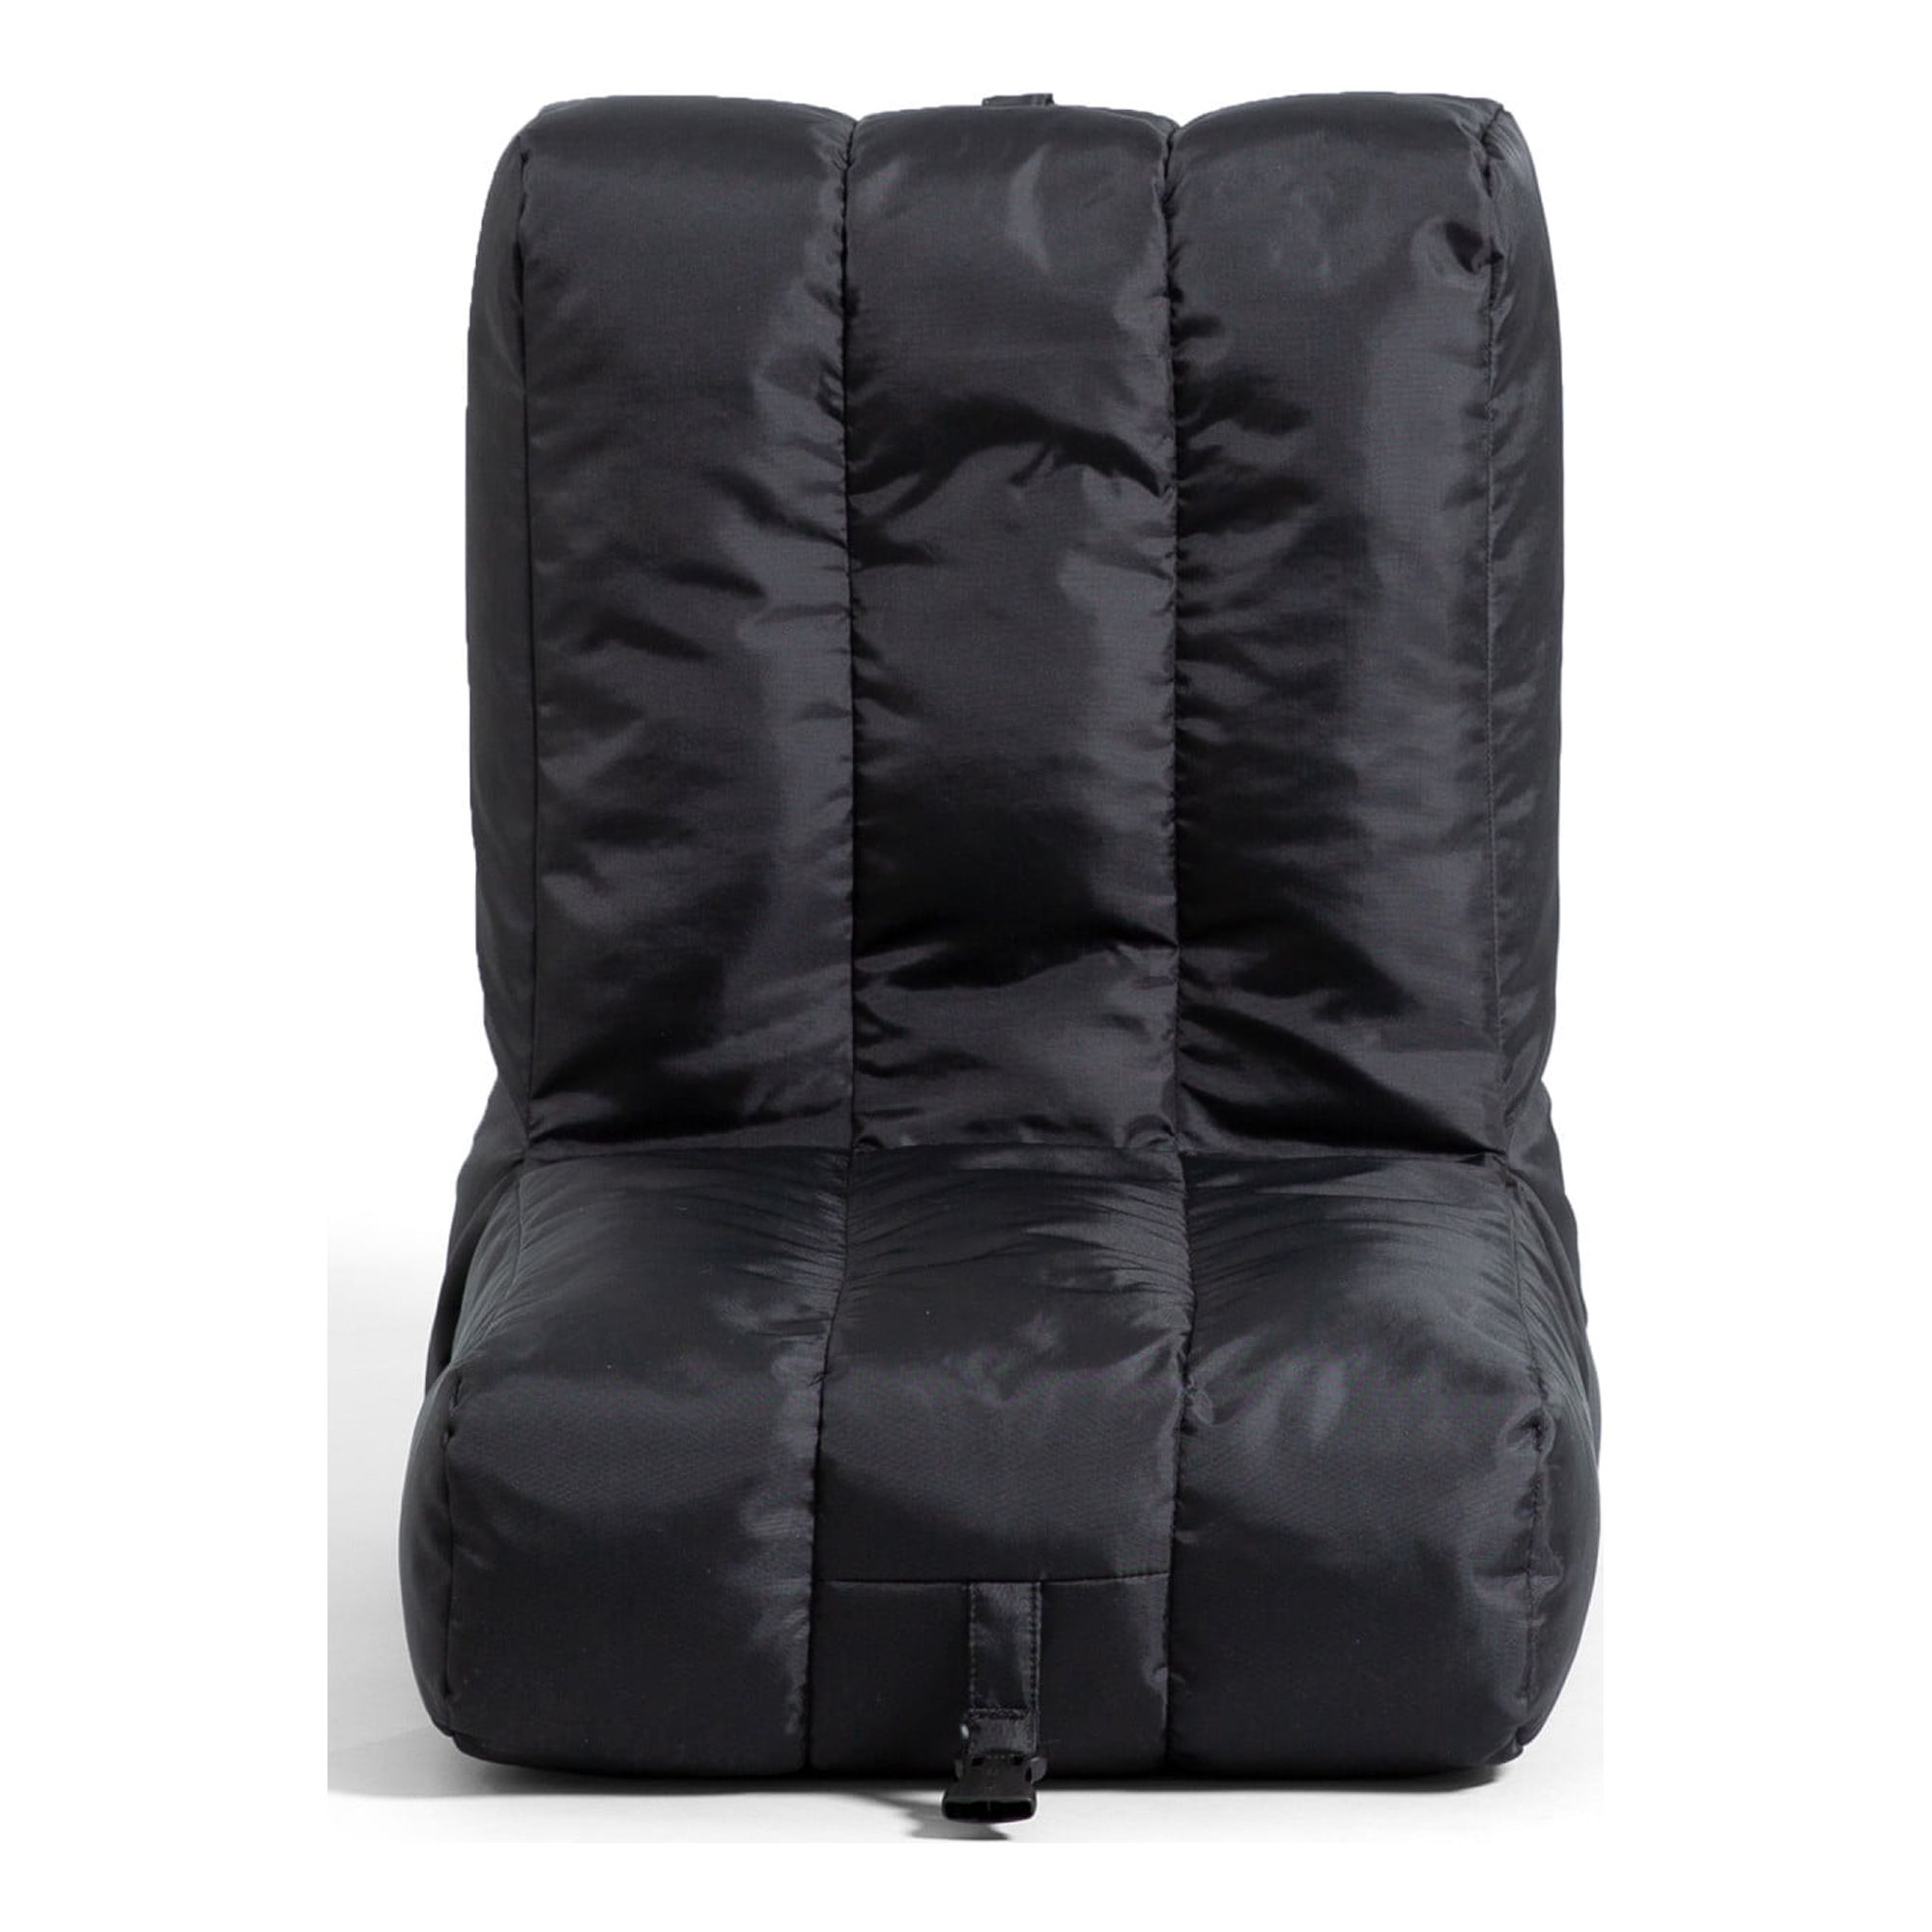 Big Joe Grab & Go Travel Bean Bag Chair, Black SmartMax, Durable Polyester Nylon Blend, 1.5 feet - image 1 of 9